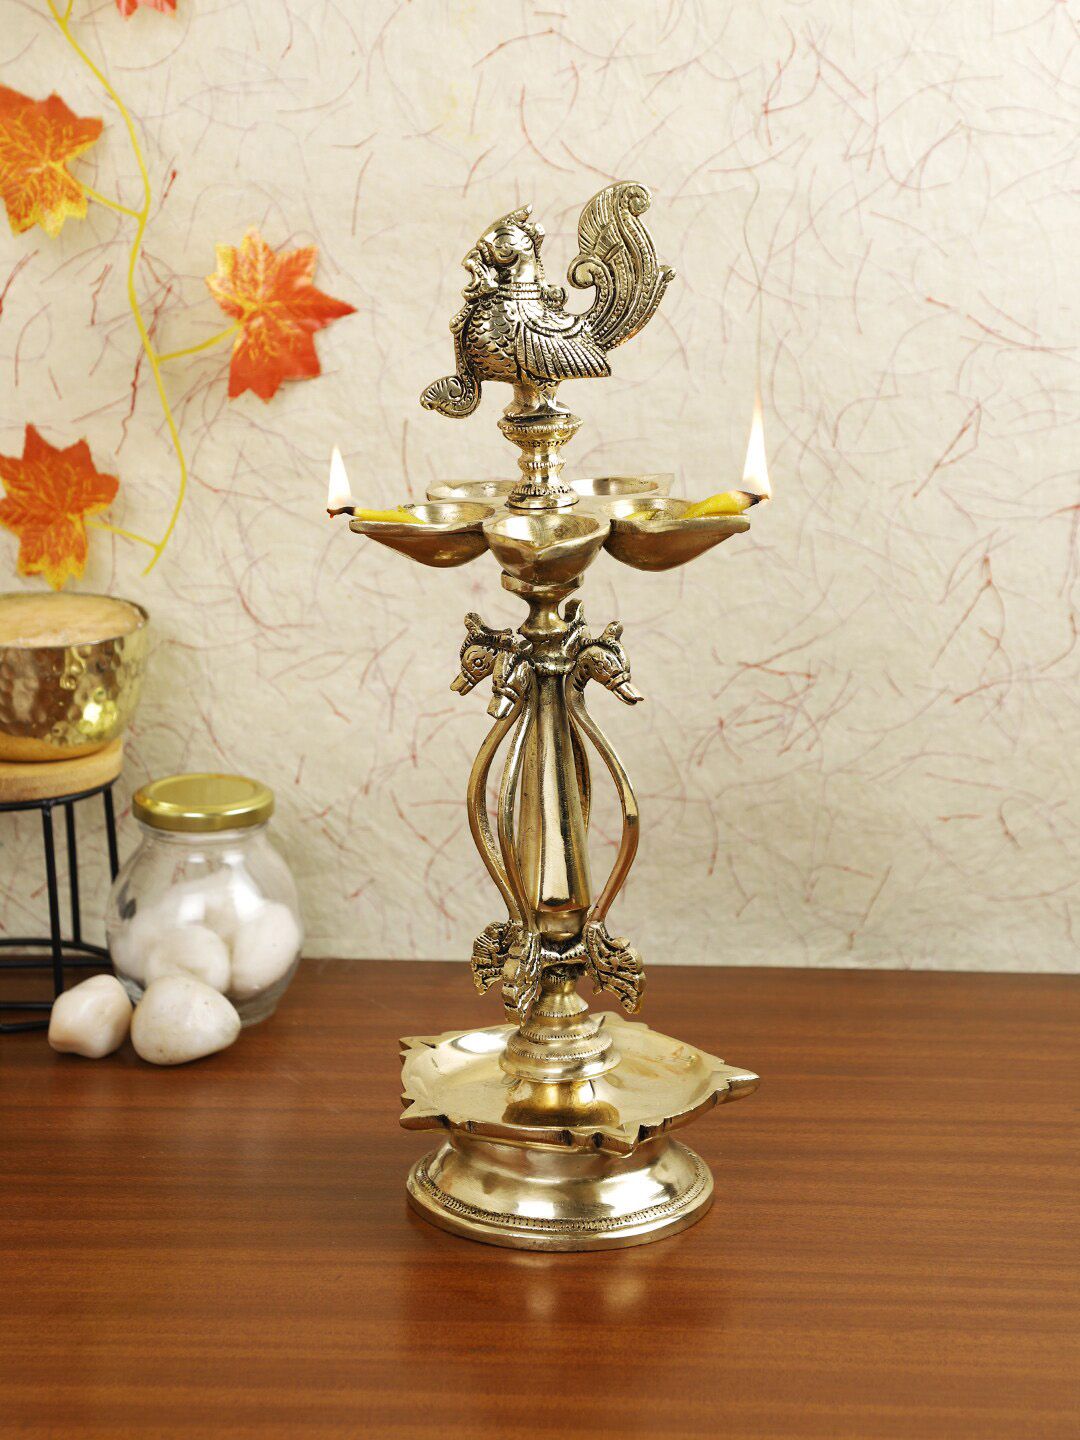 Imli Street Gold-Toned Brass Pancham Bird Diya Lamp Price in India